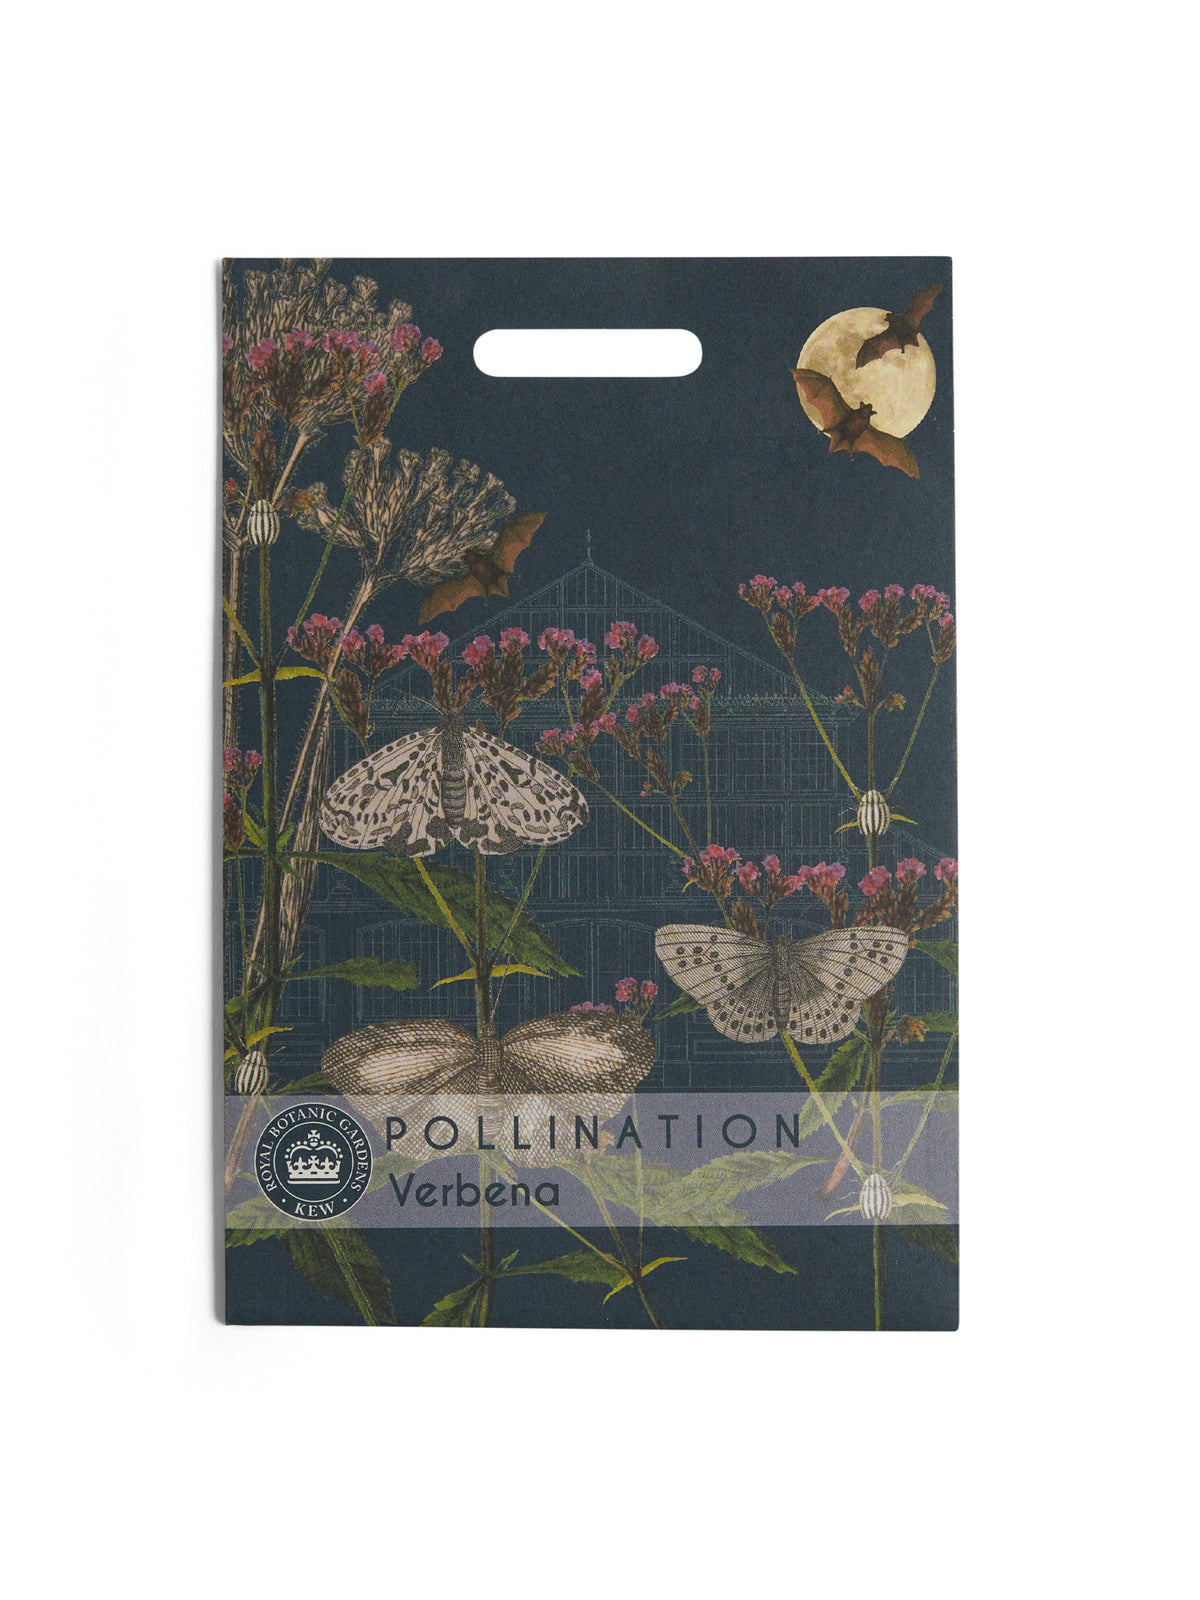 Kew Pollination Collection Verbena bonariensis